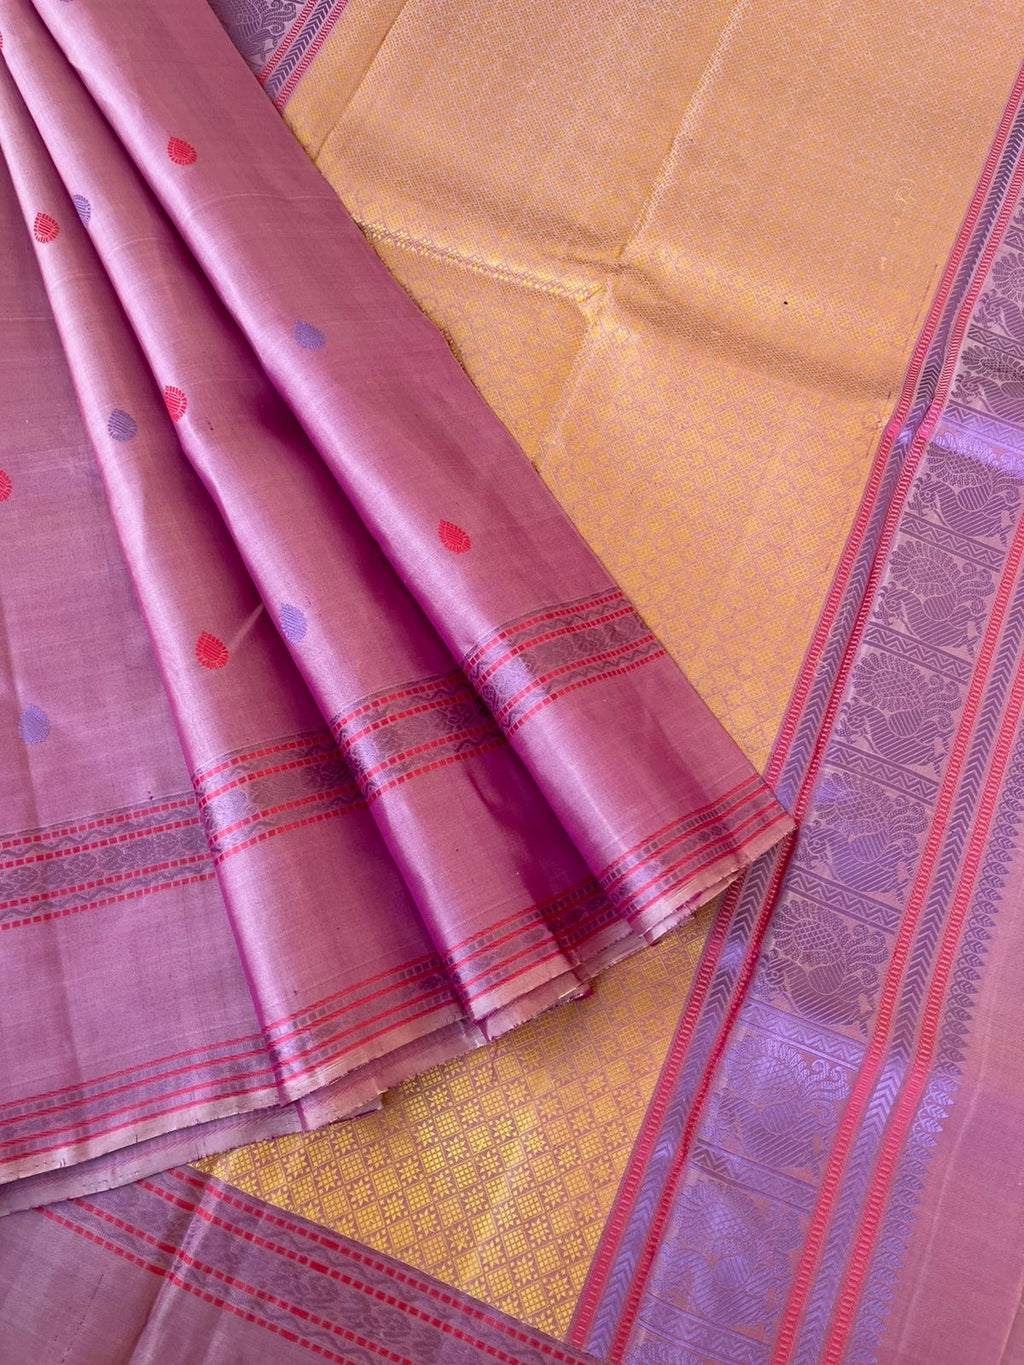 Woven from Memories - Beautiful No Zari Kanchivarams - unusual onion peal pink retta pett woven borders